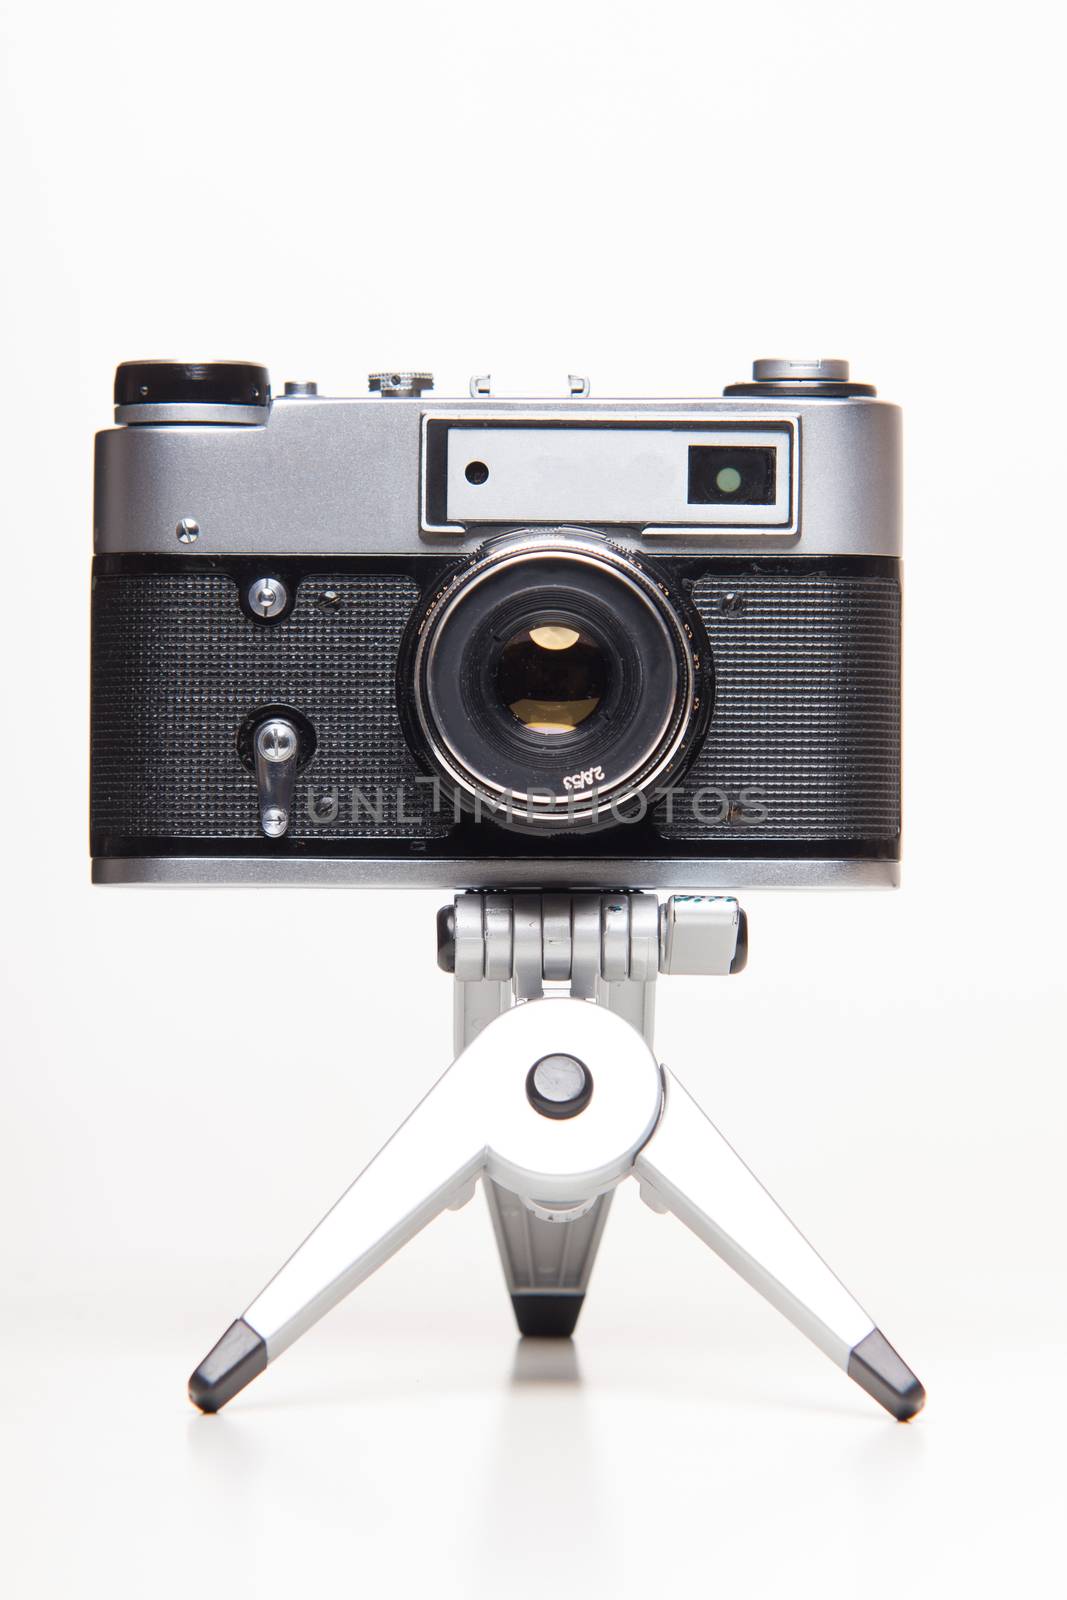 Classic 35mm old analog camera on tripod - studio shoot